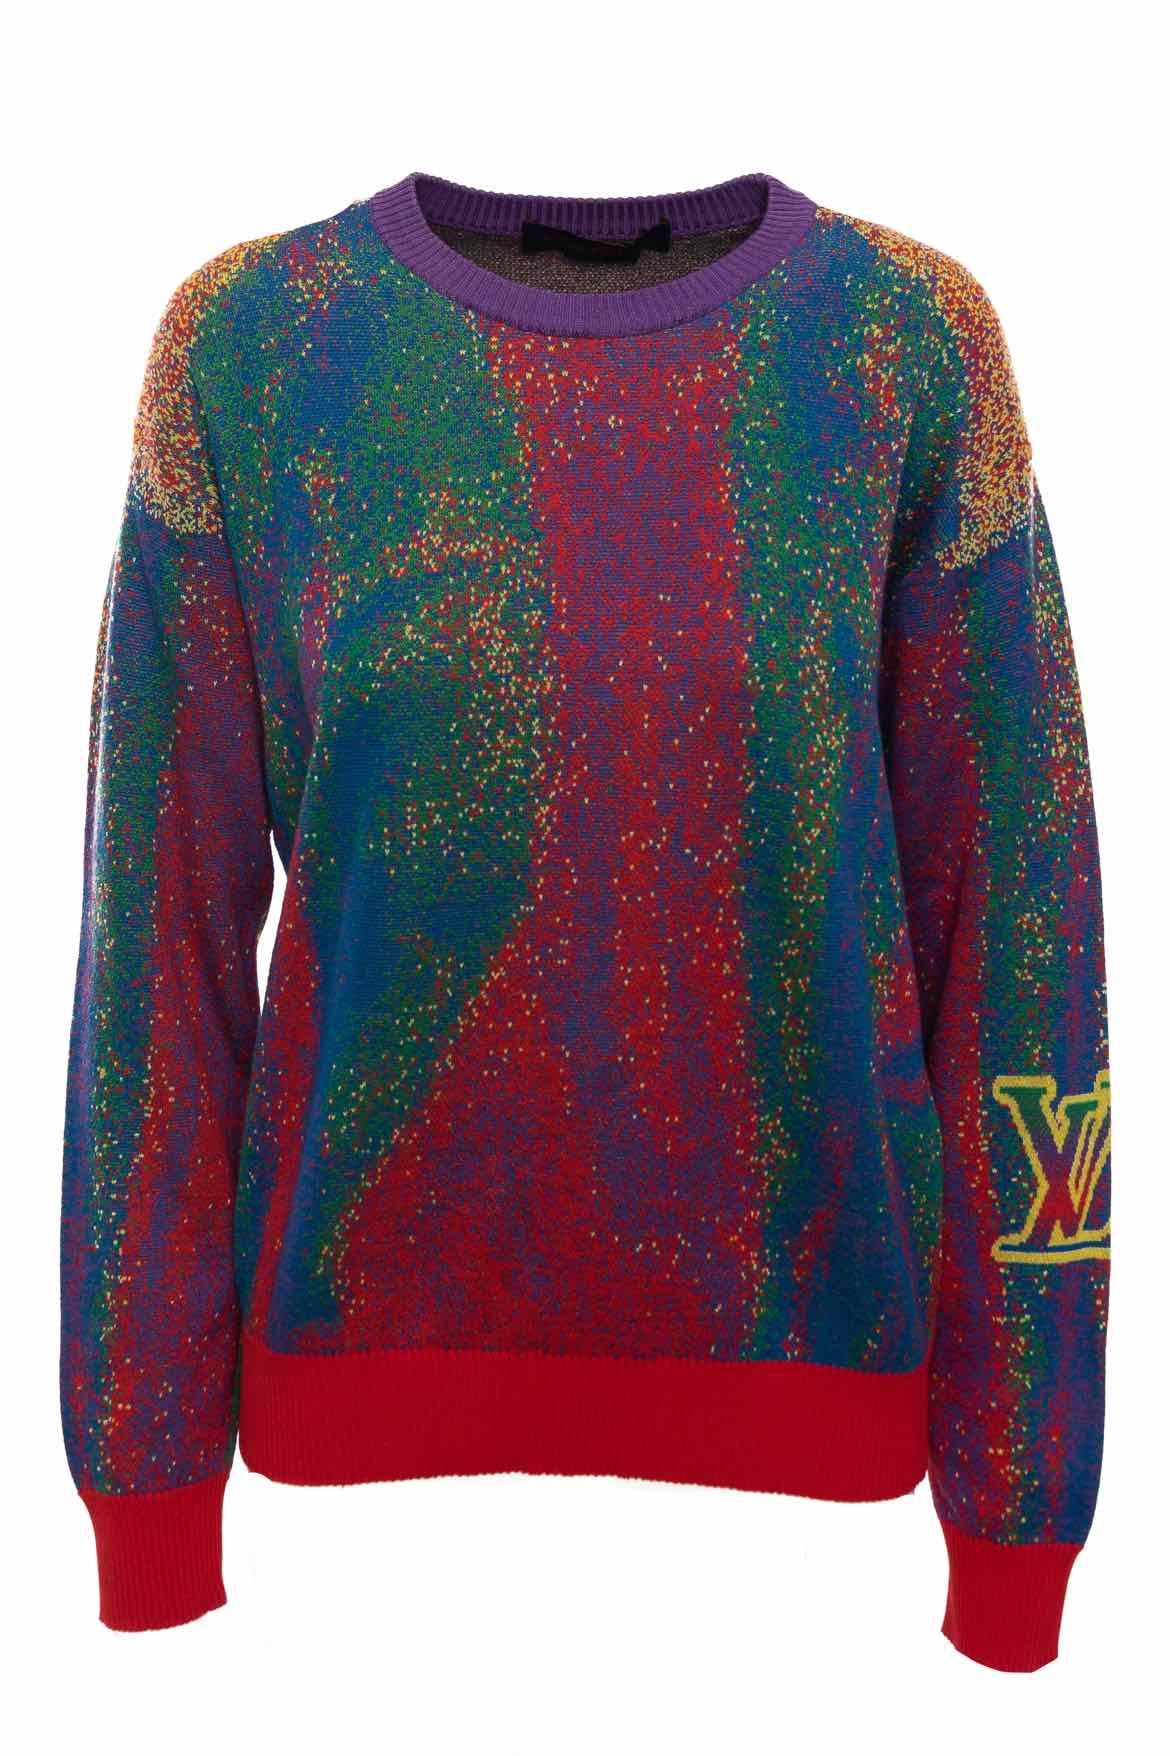 Louis Vuitton - Authenticated Sweatshirt - Cashmere Black for Men, Very Good Condition